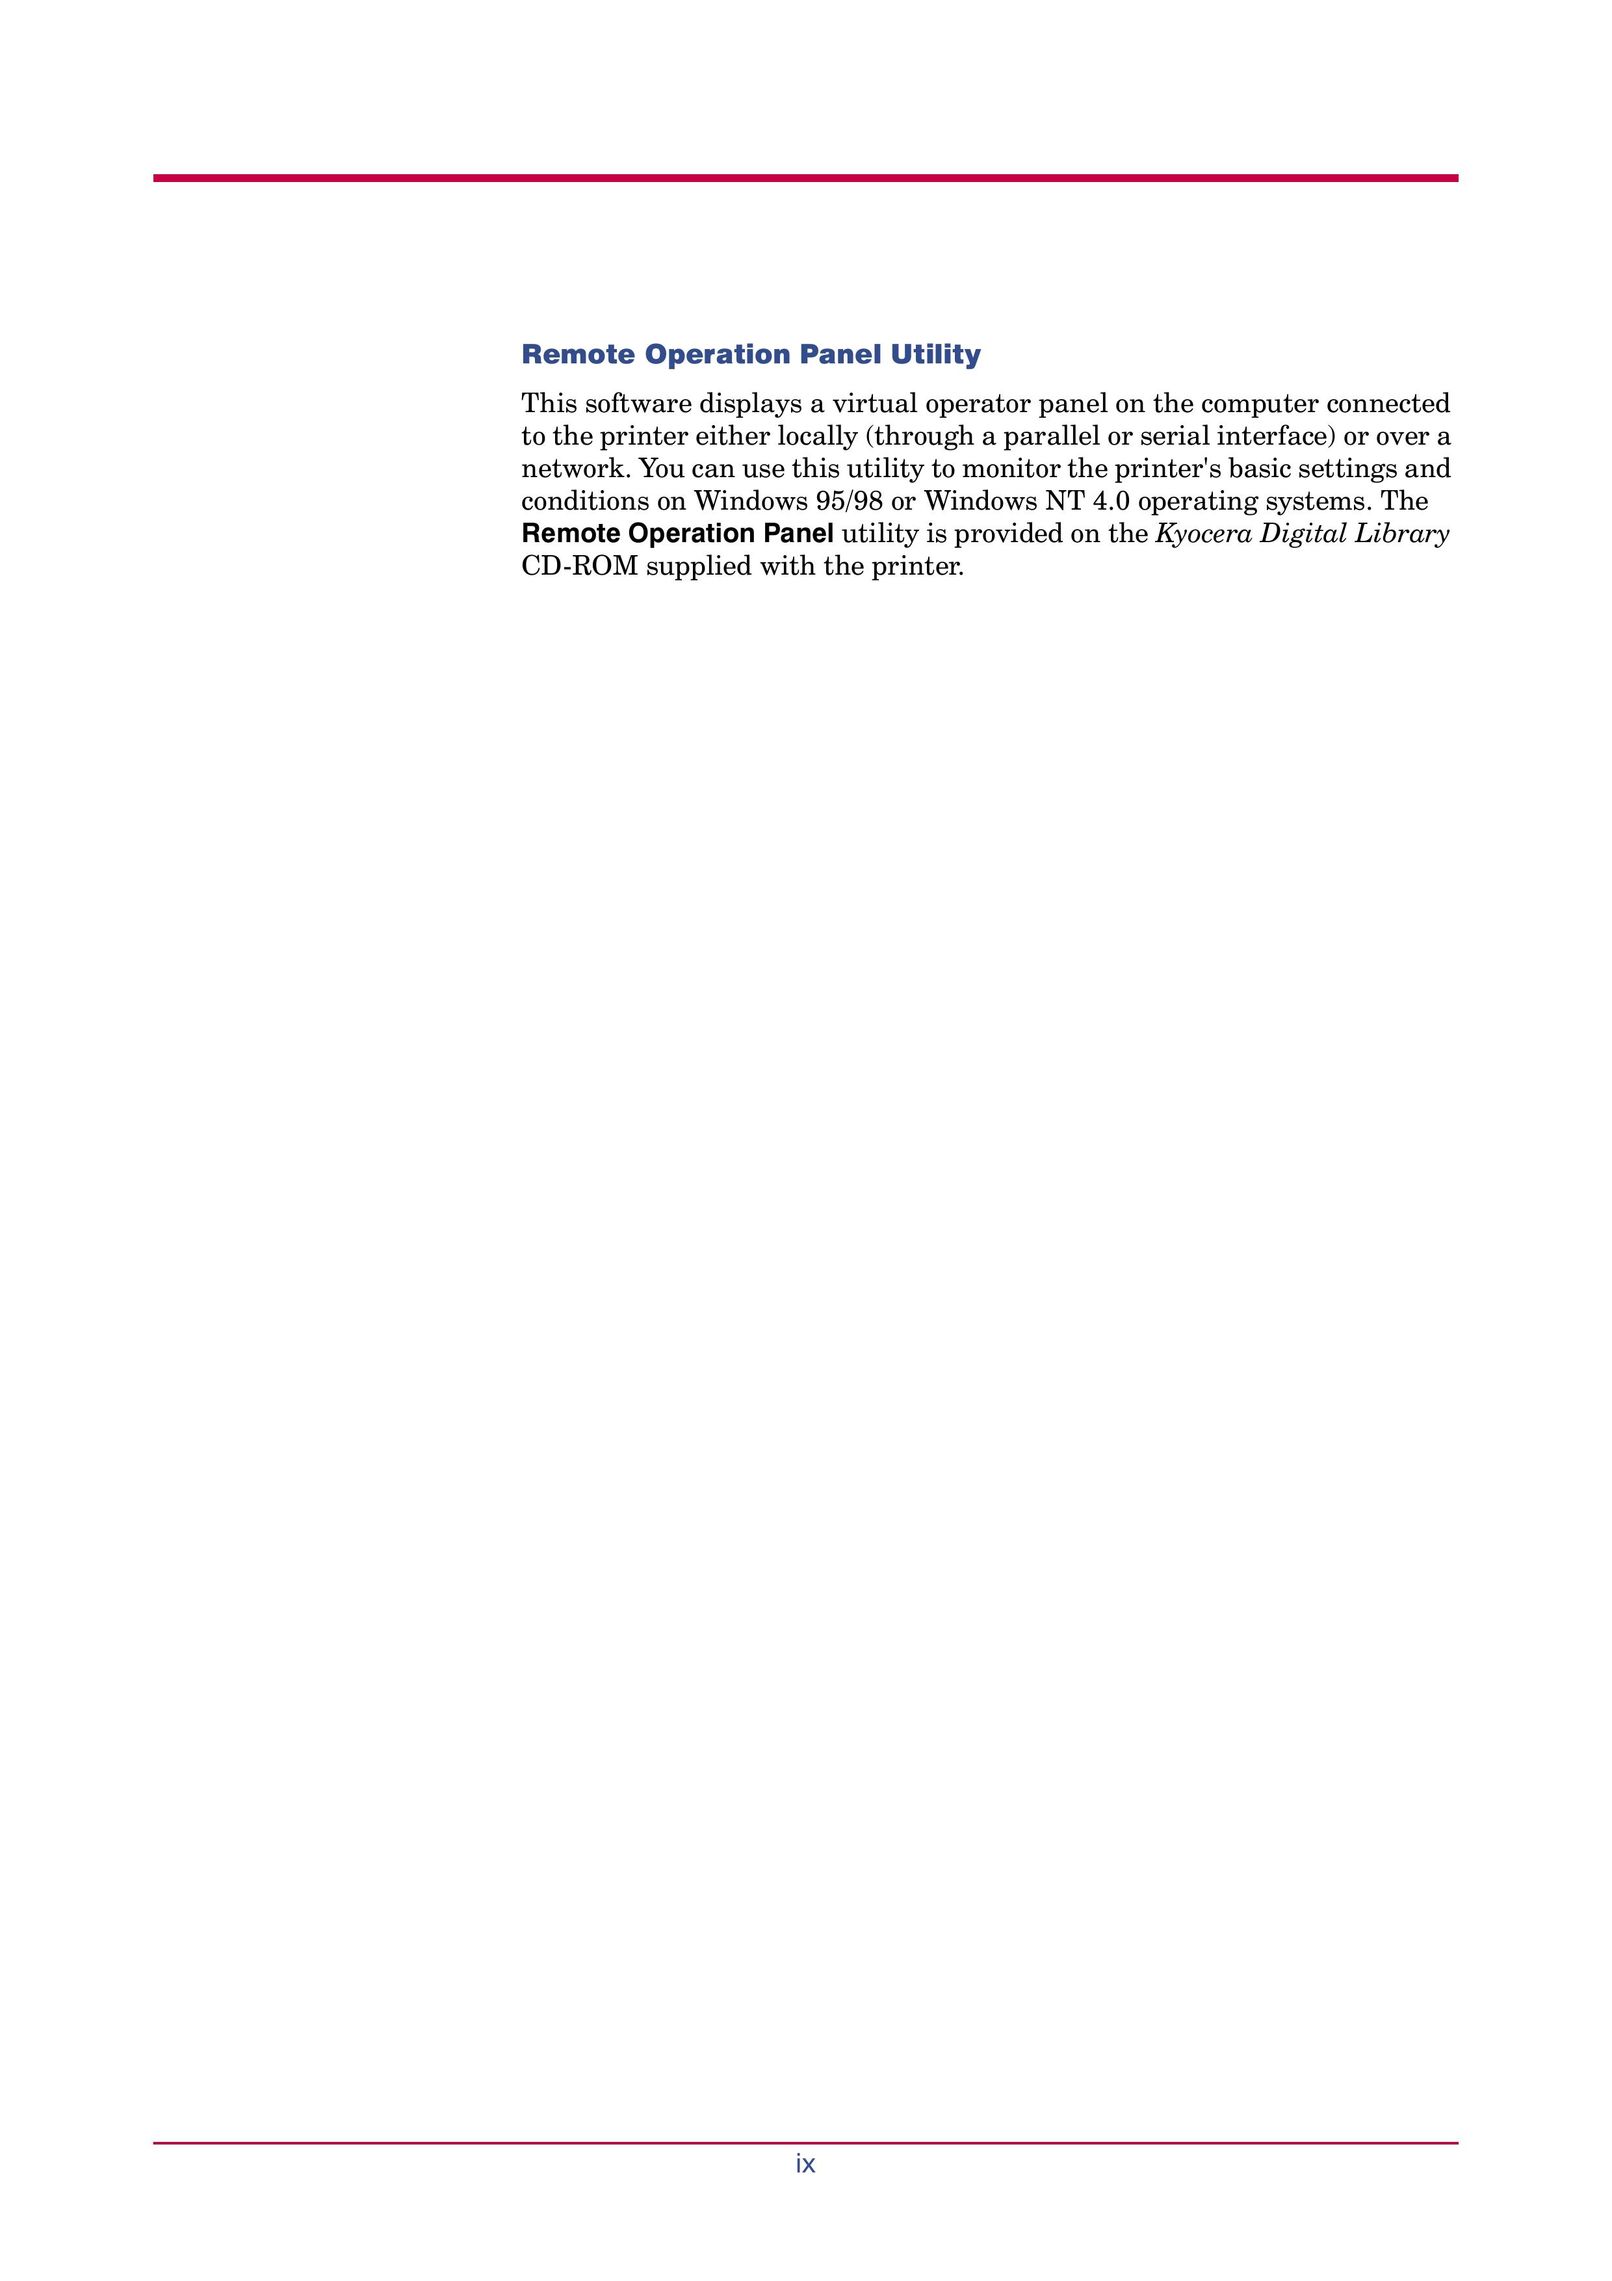 Kyocera FS-1000 Printer User Manual (Page 10)